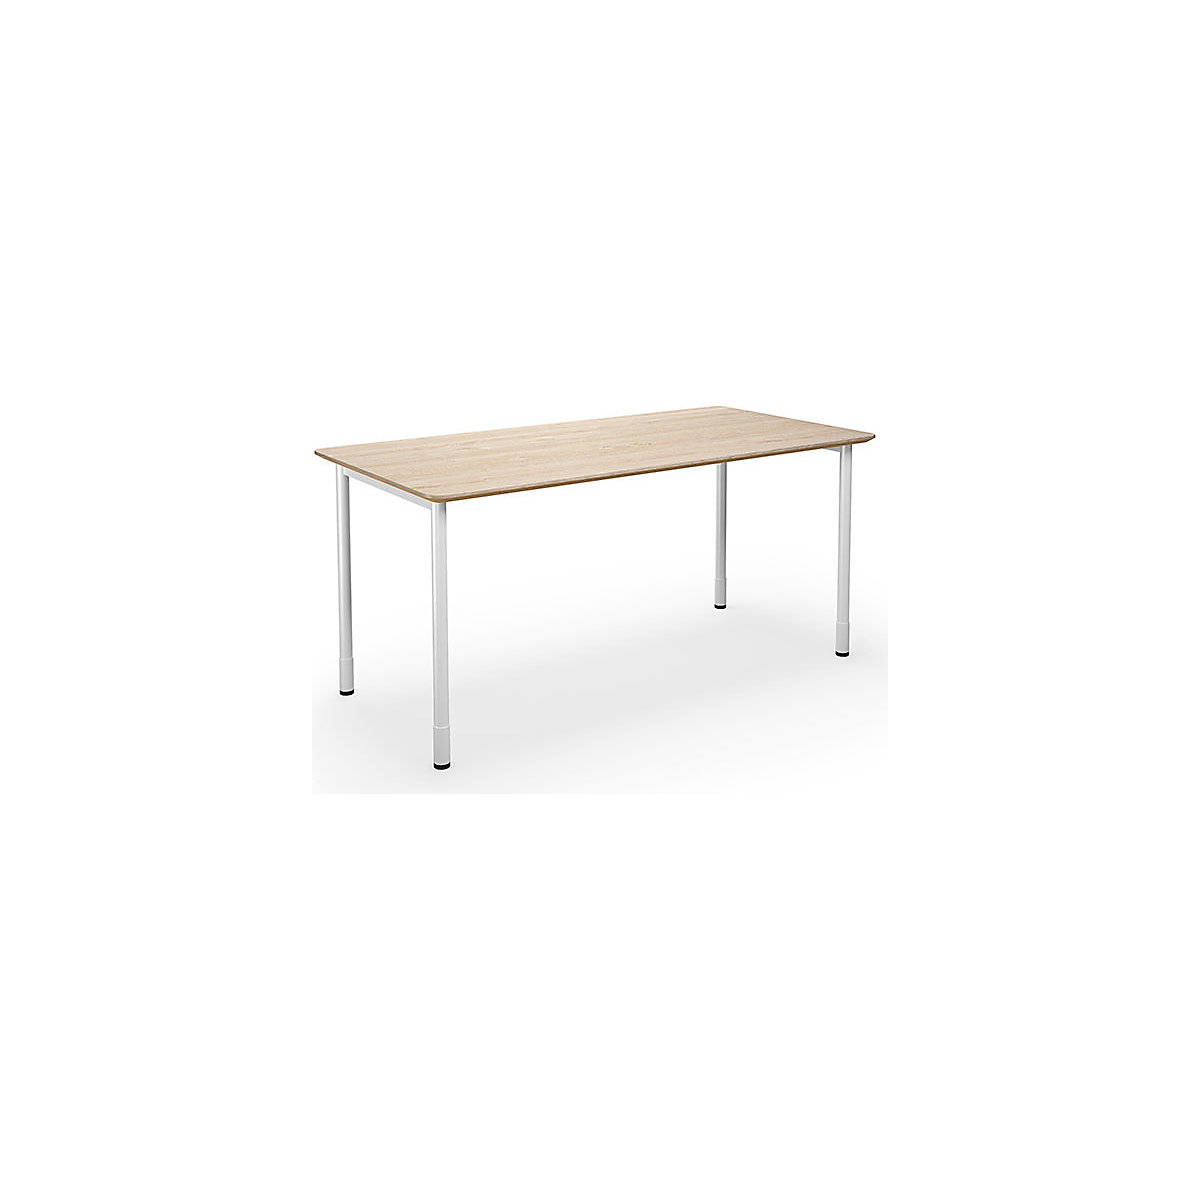 DUO-C Trend multi-purpose desk, straight tabletop, rounded corners, WxD 1400 x 800 mm, oak, white-5